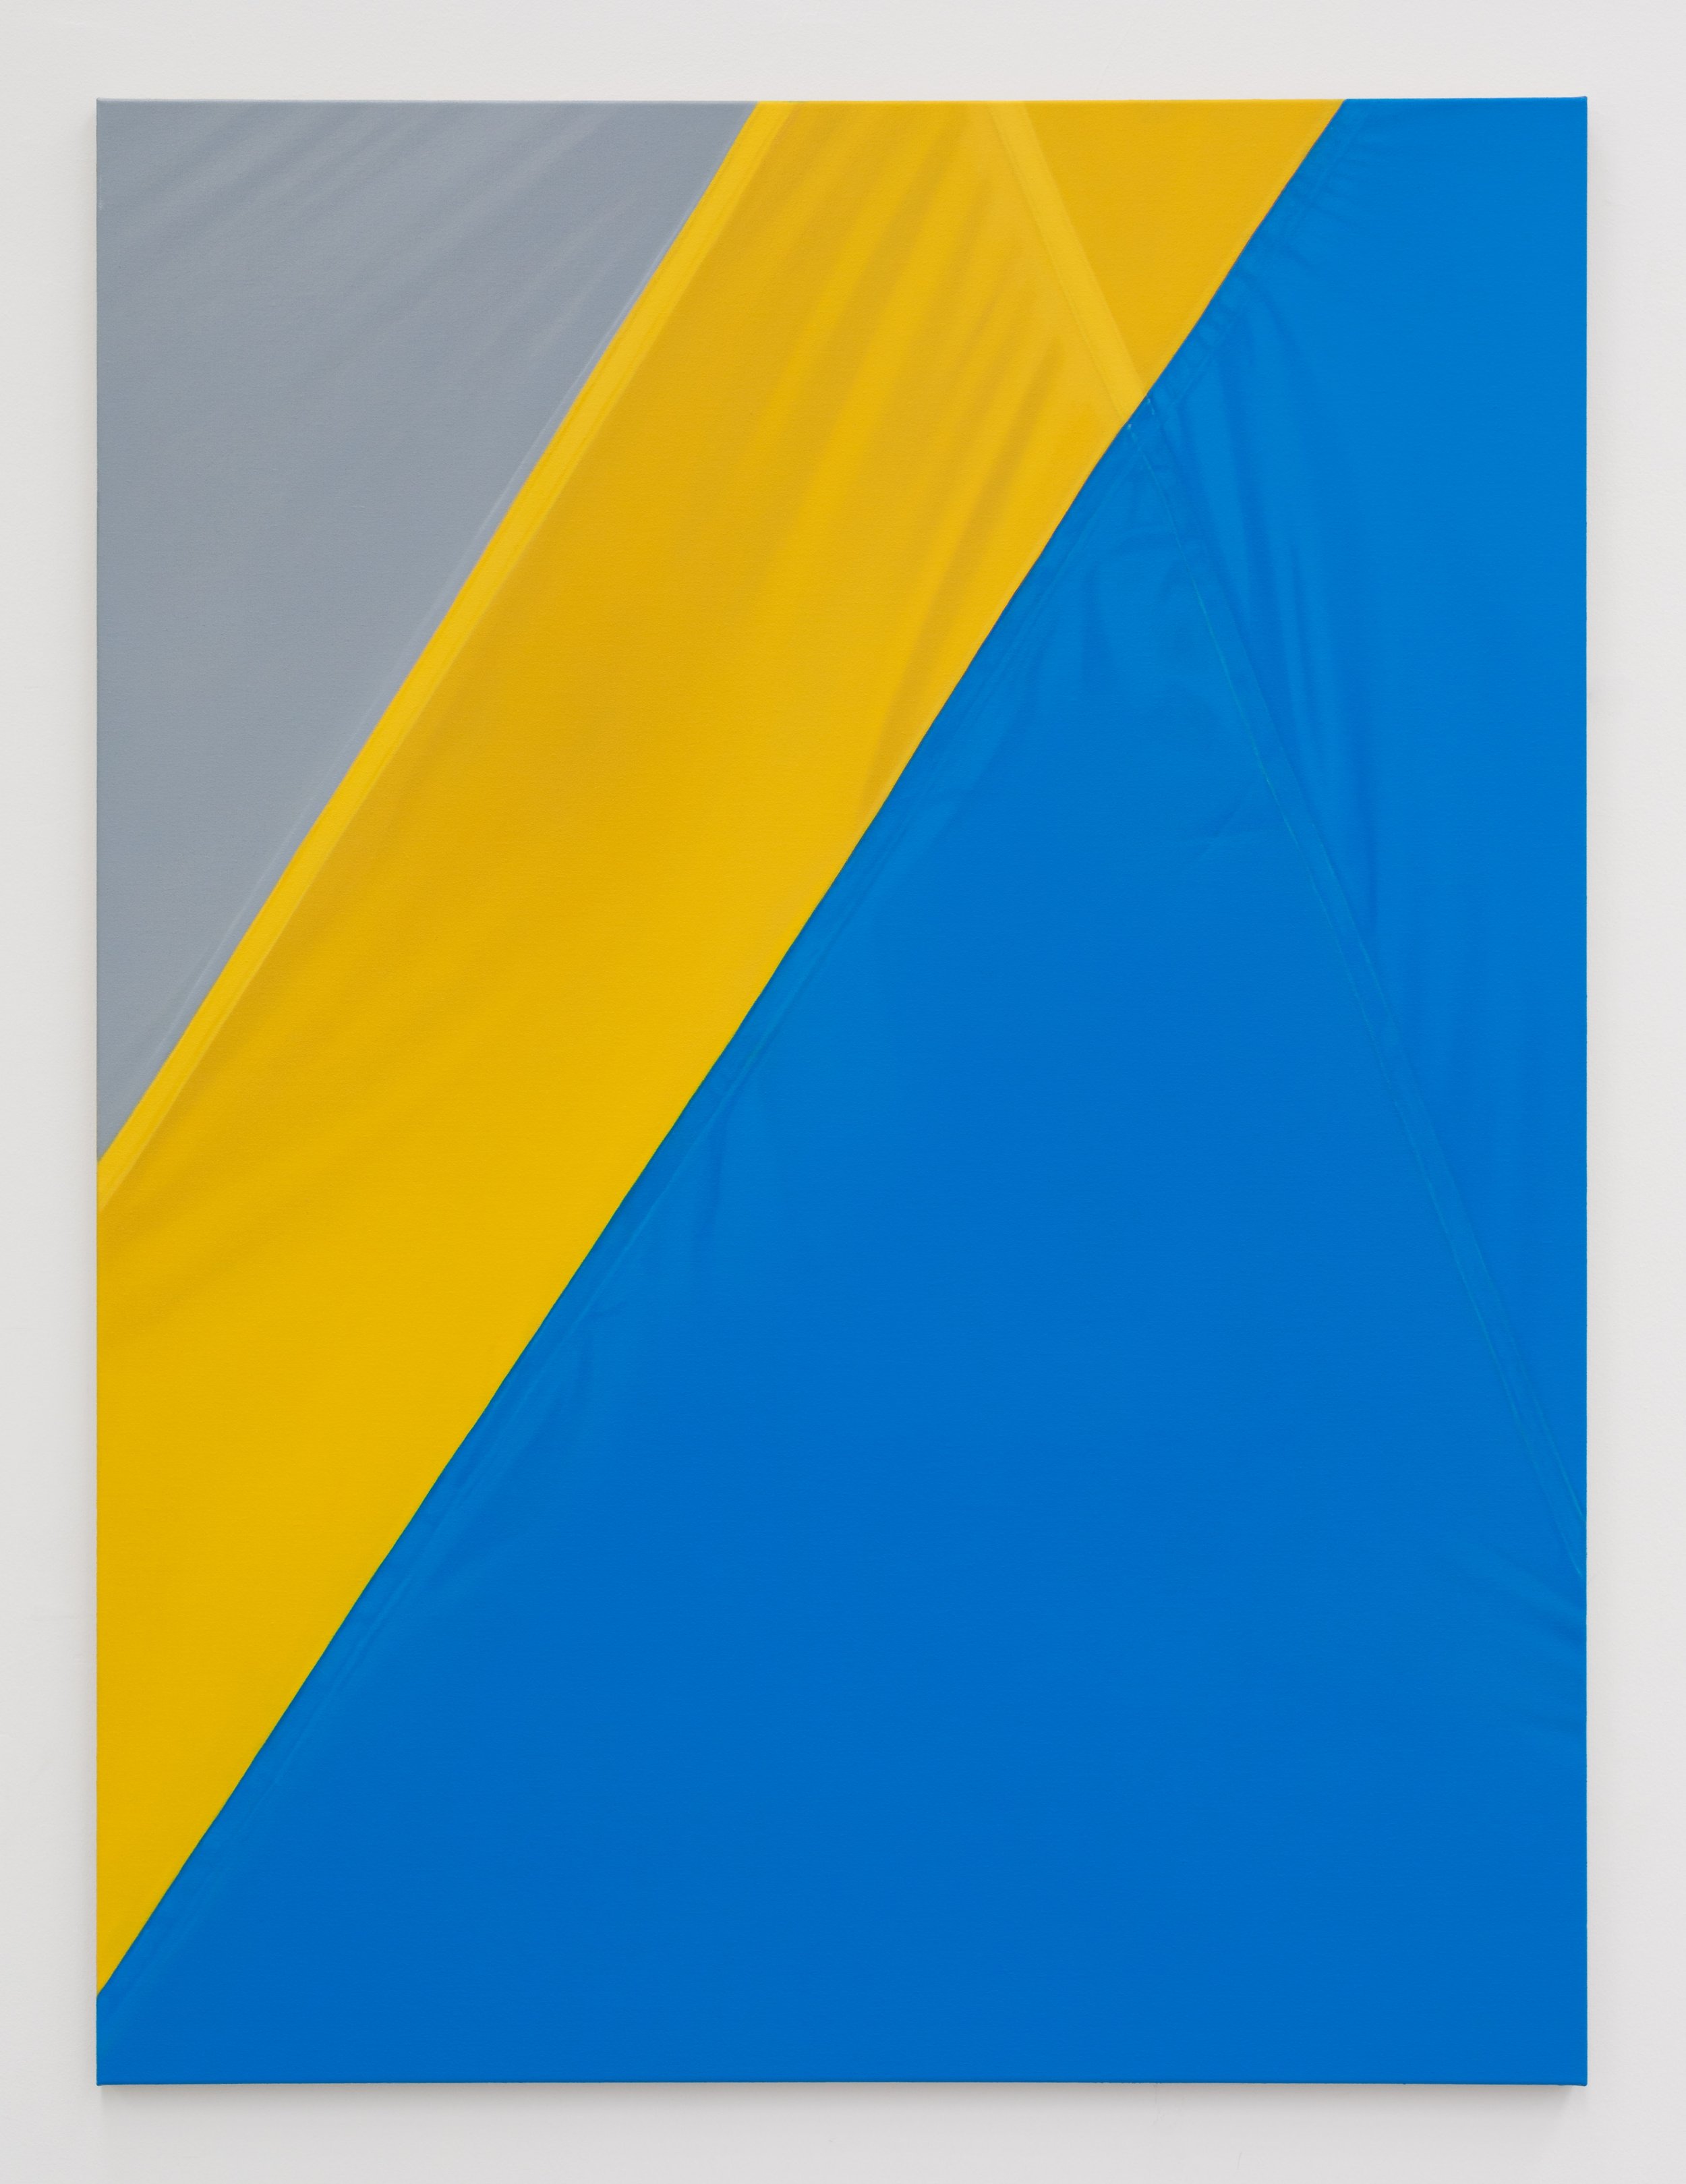 Grey, yellow, blue, 2020 oil on linen 140 x 105 cm / 55.1 x 41.3 in   